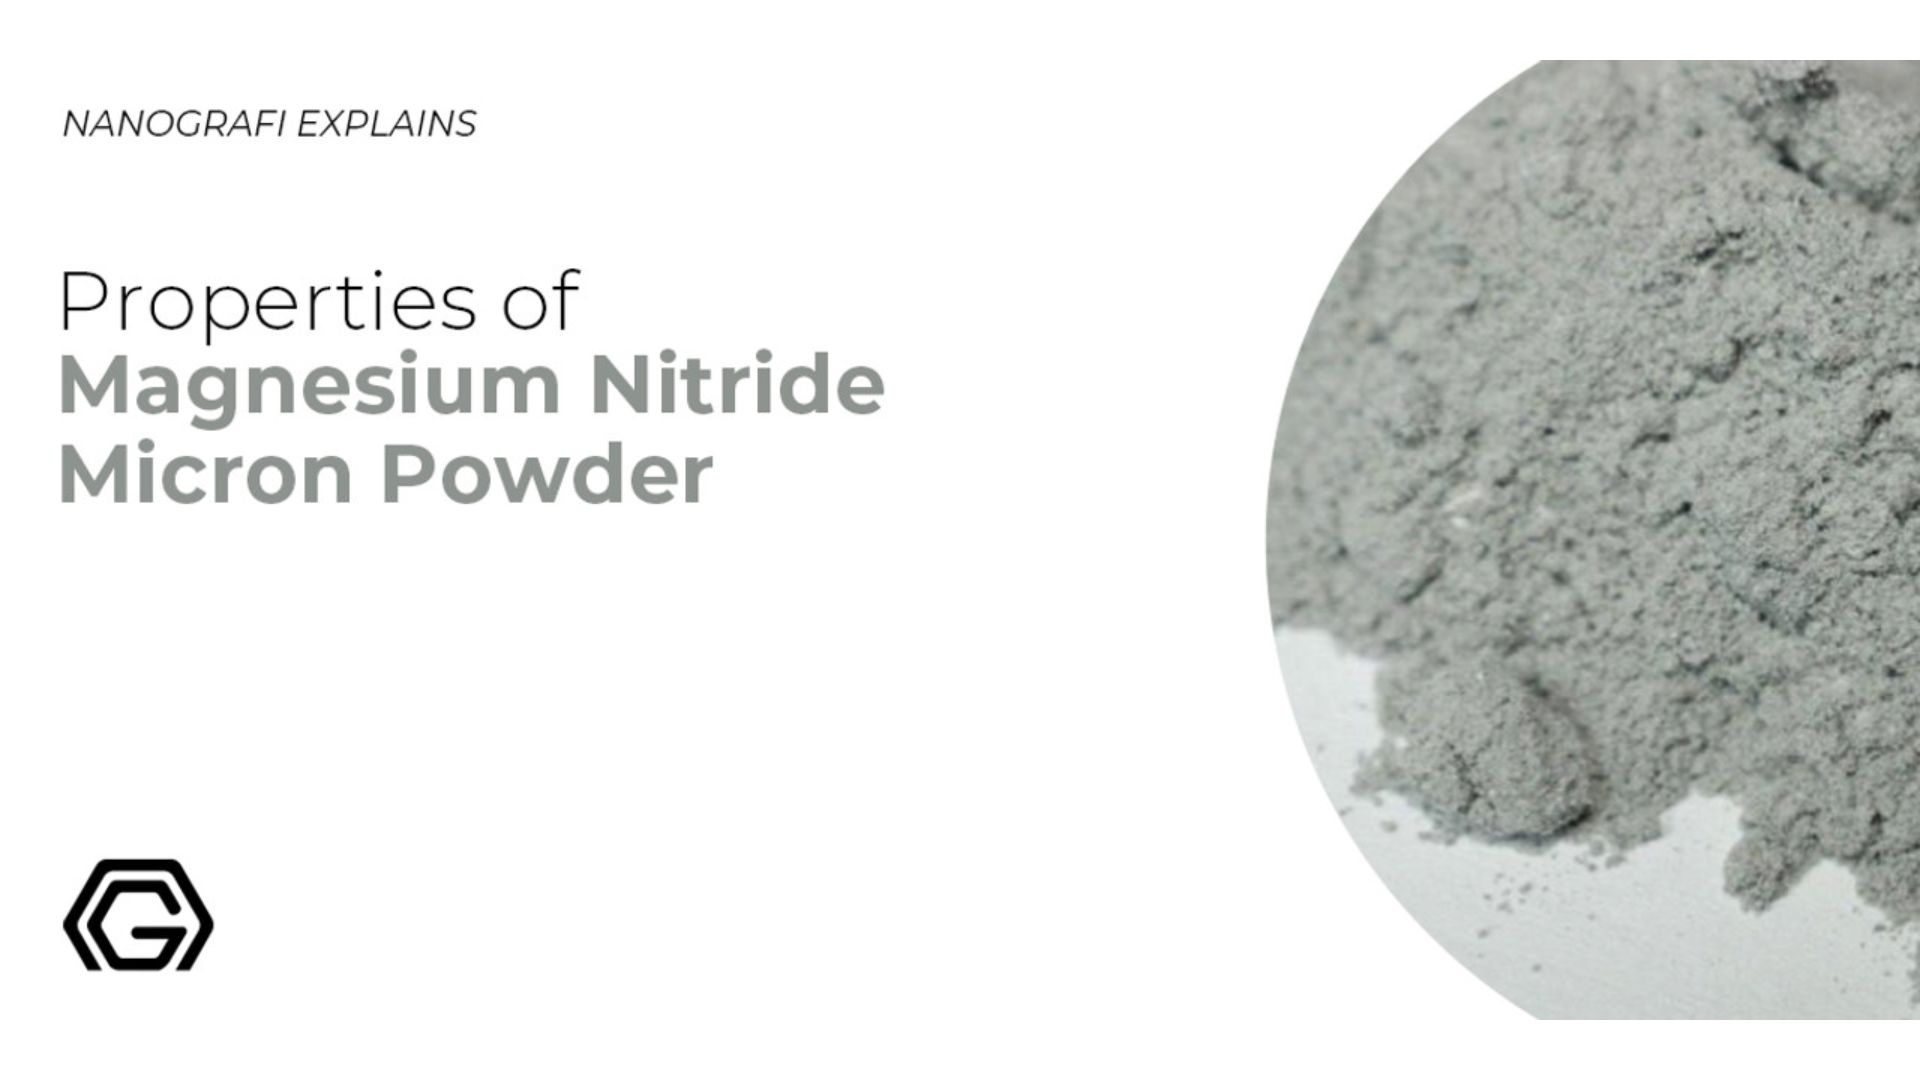 Properties of magnesium nitride micron powder